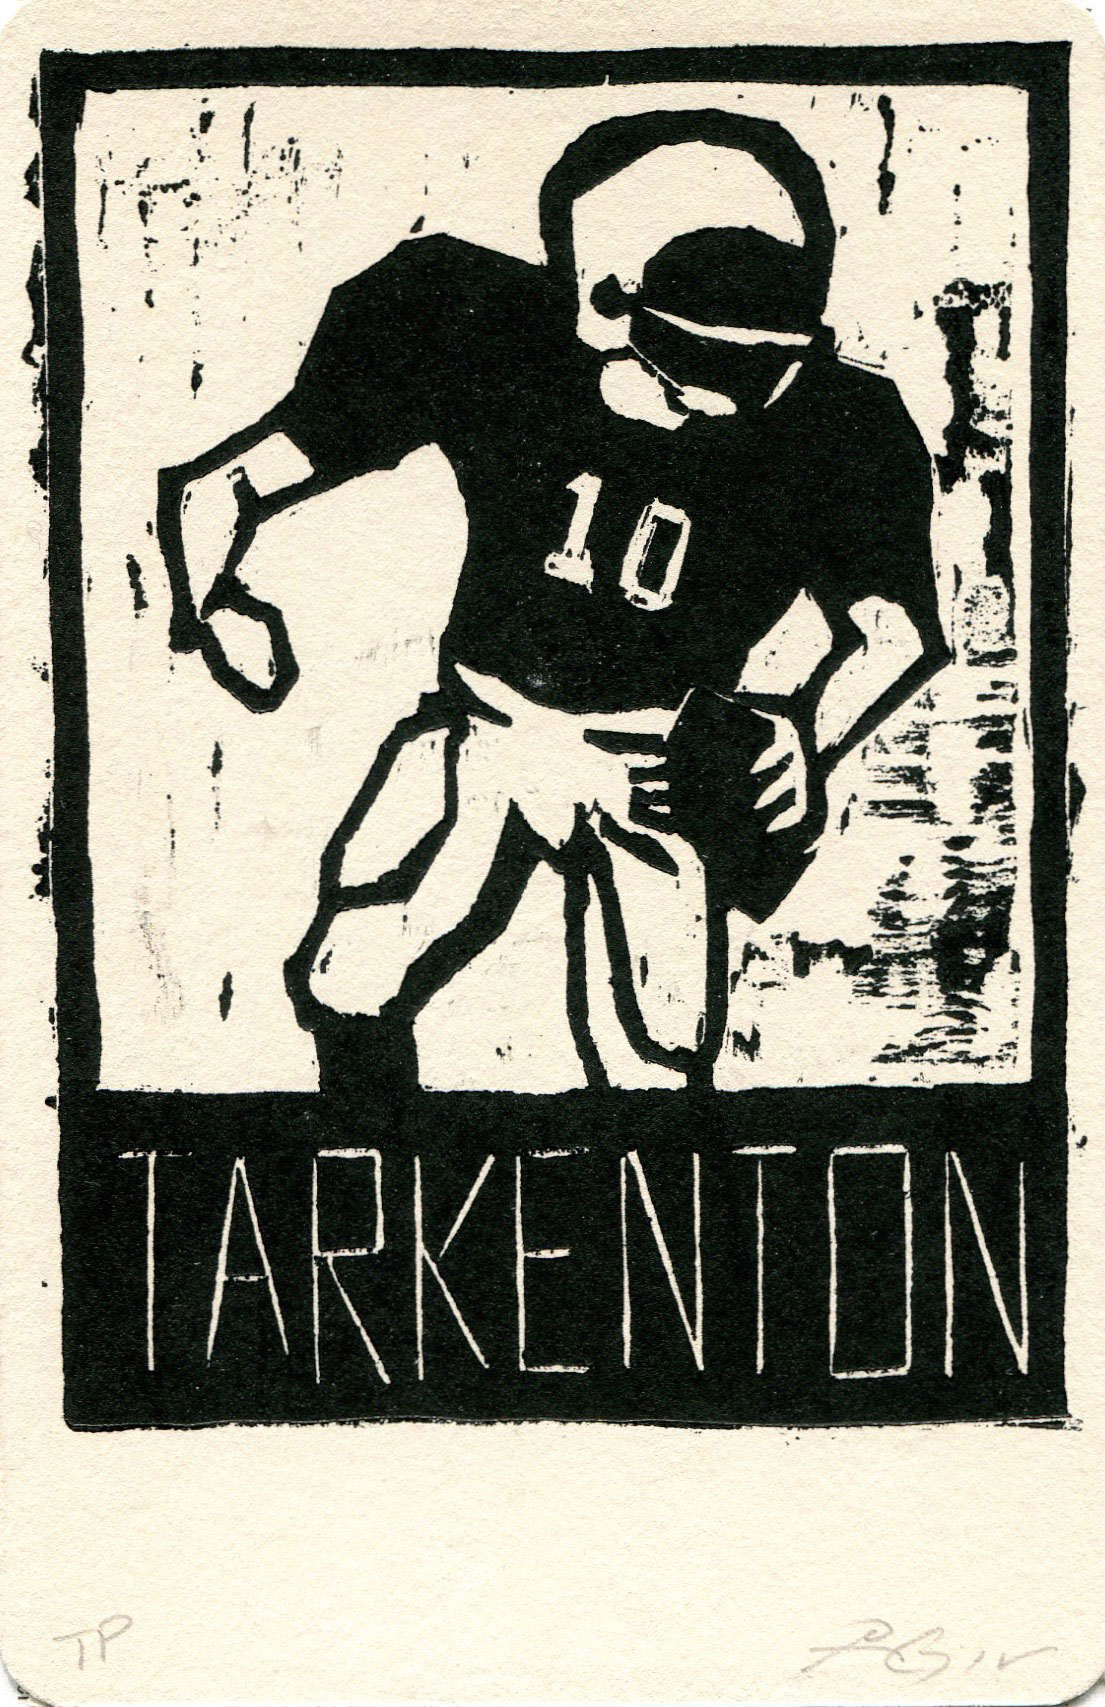 Tarkenton, Heroes of the Southland 2016, 3.75”x5.75”